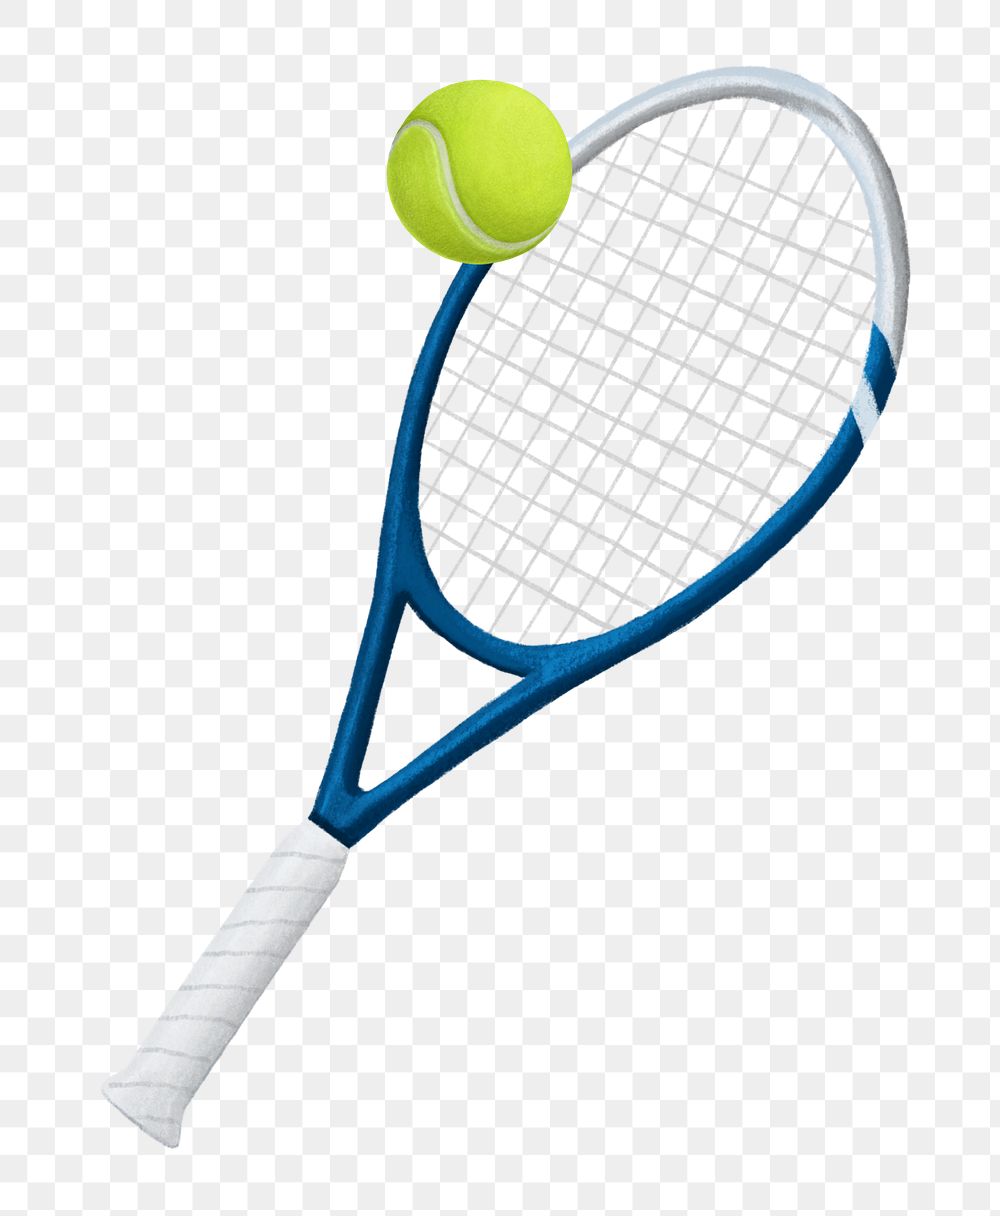 Tennis racket and ball png sticker, sport equipment, transparent background